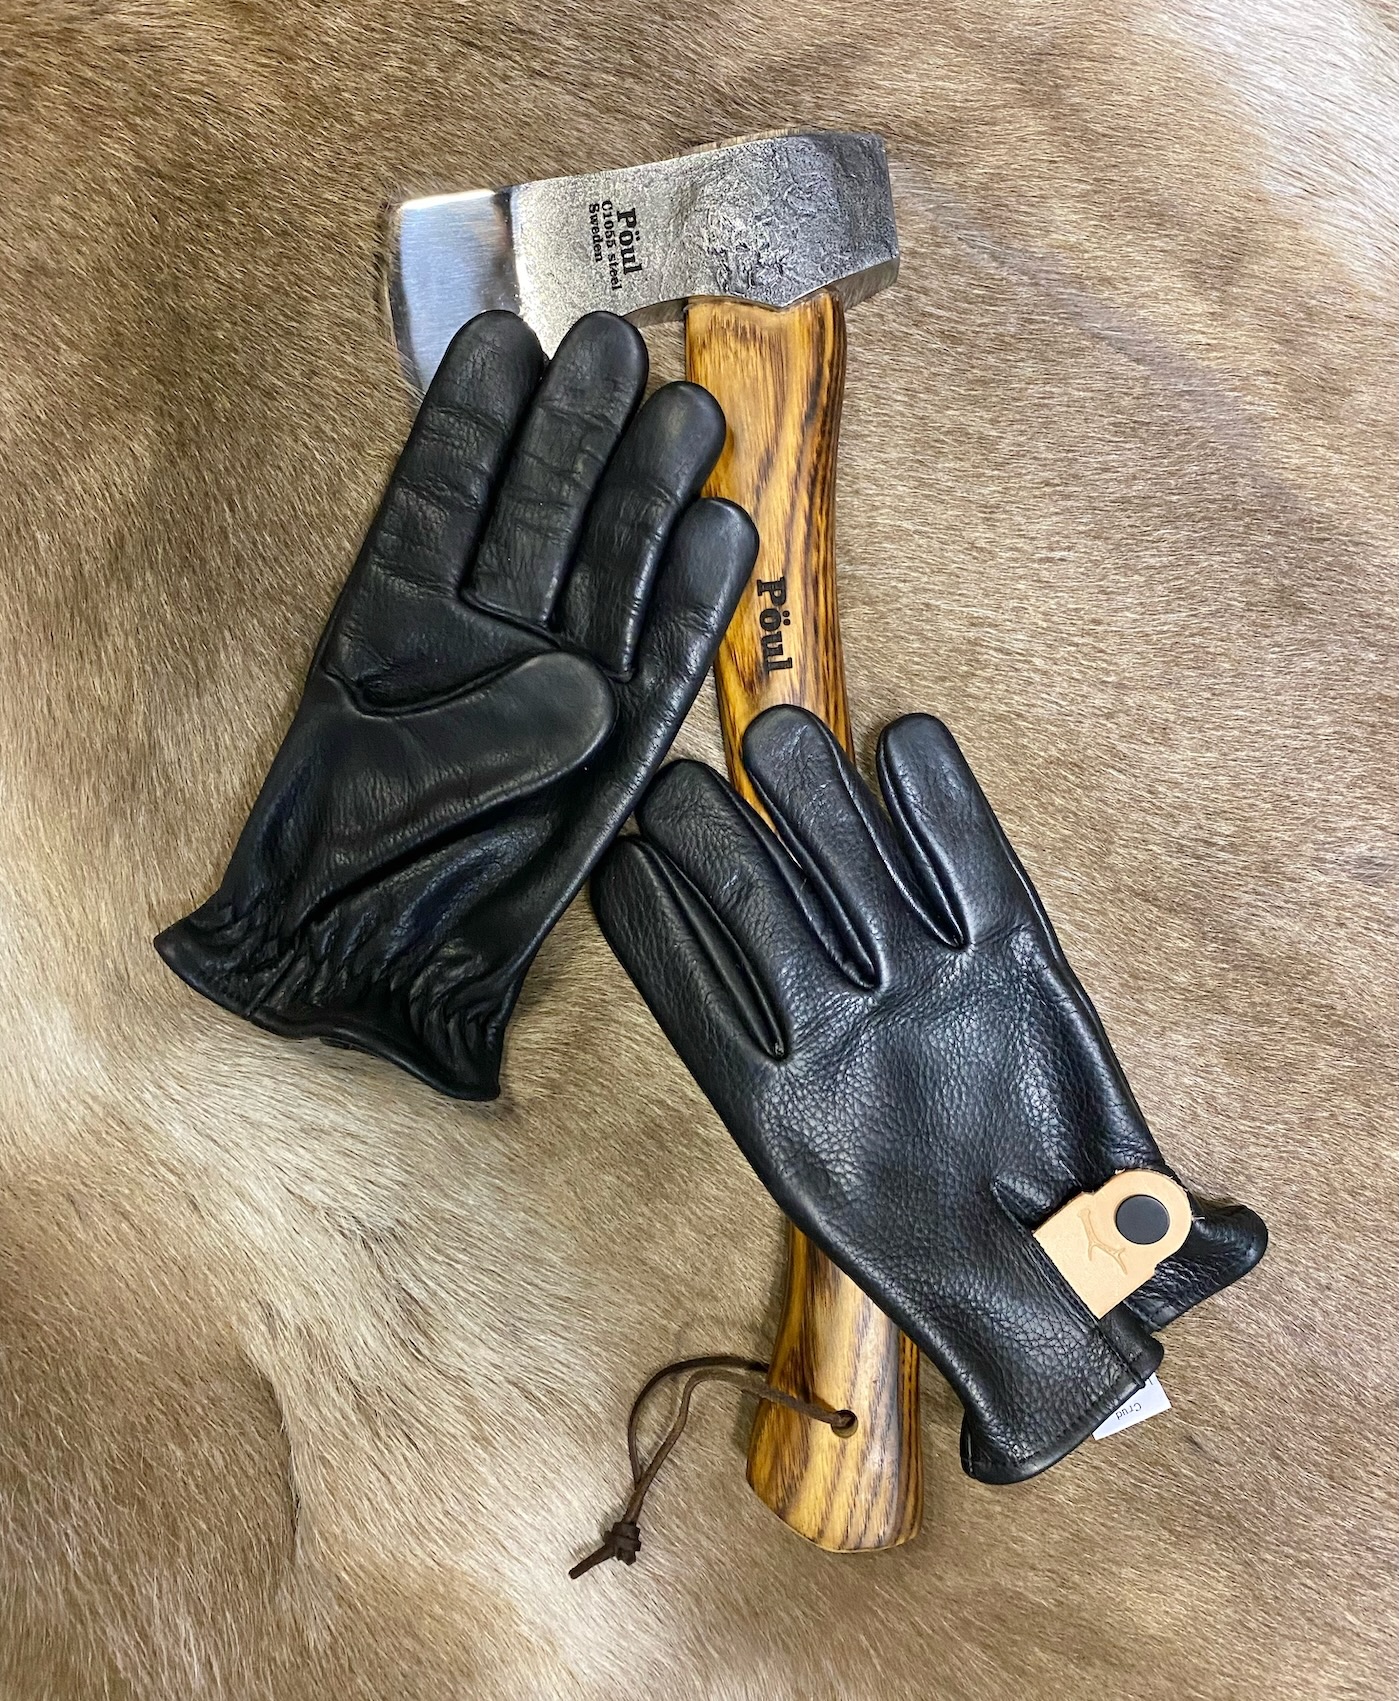 Кожаные перчатки Crud Rider gloves, Black для туризма, бушкрафта, города